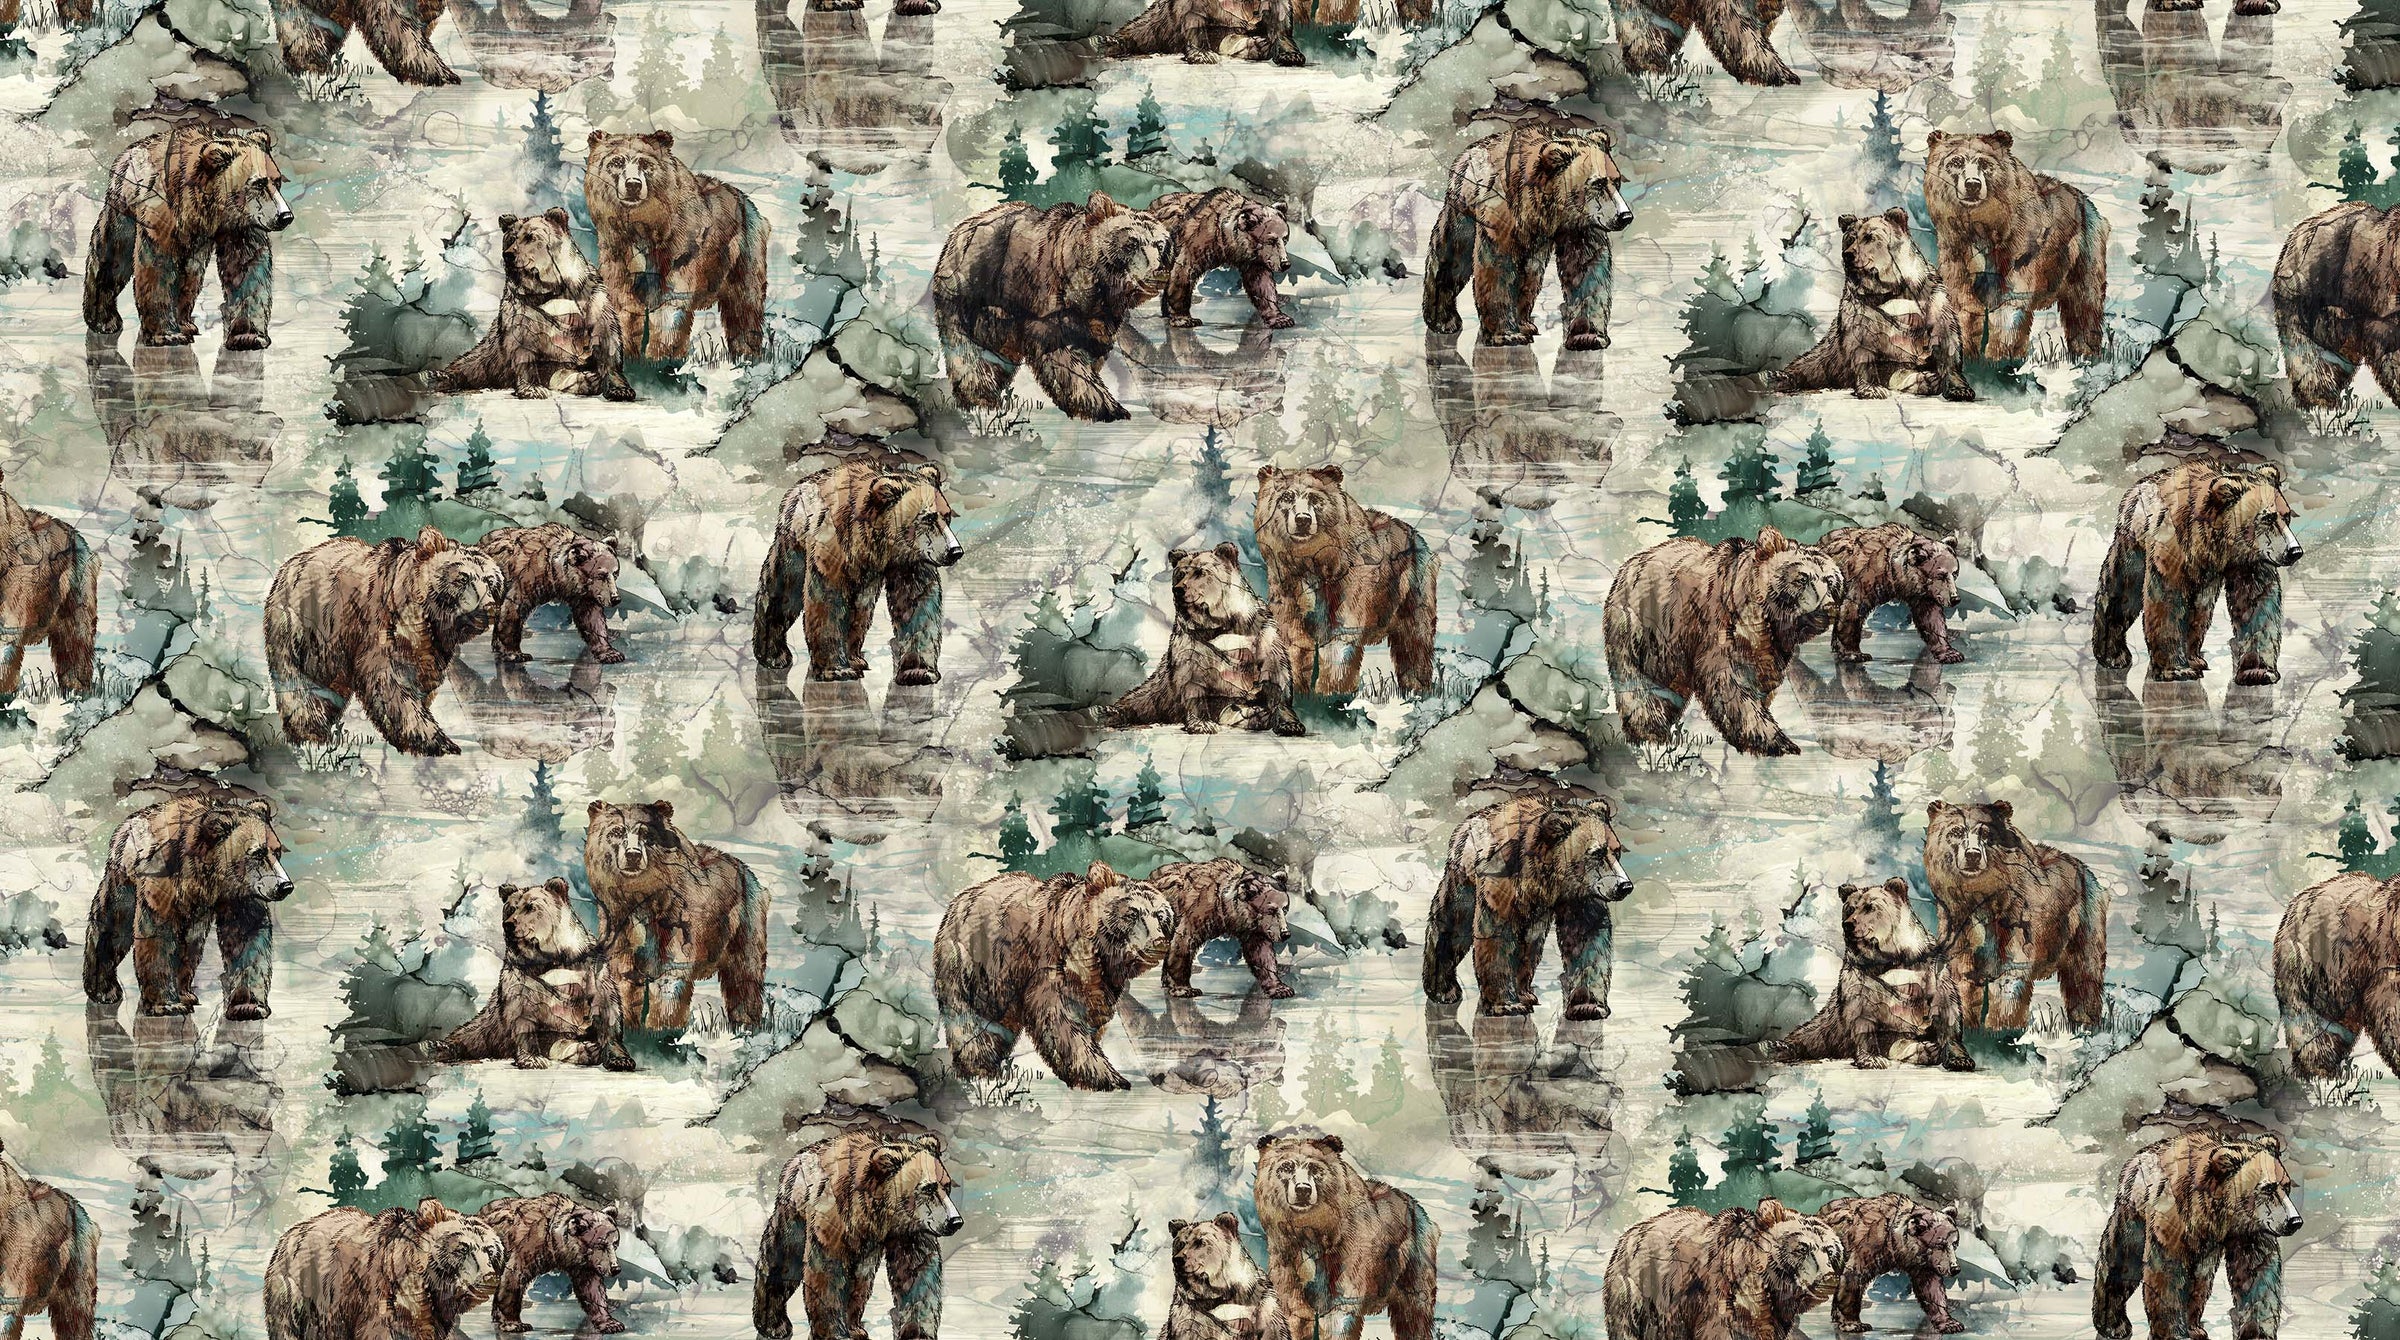 Northern Peaks Quilt Fabric - Bears in Sage Green/Multi - DP25167-71